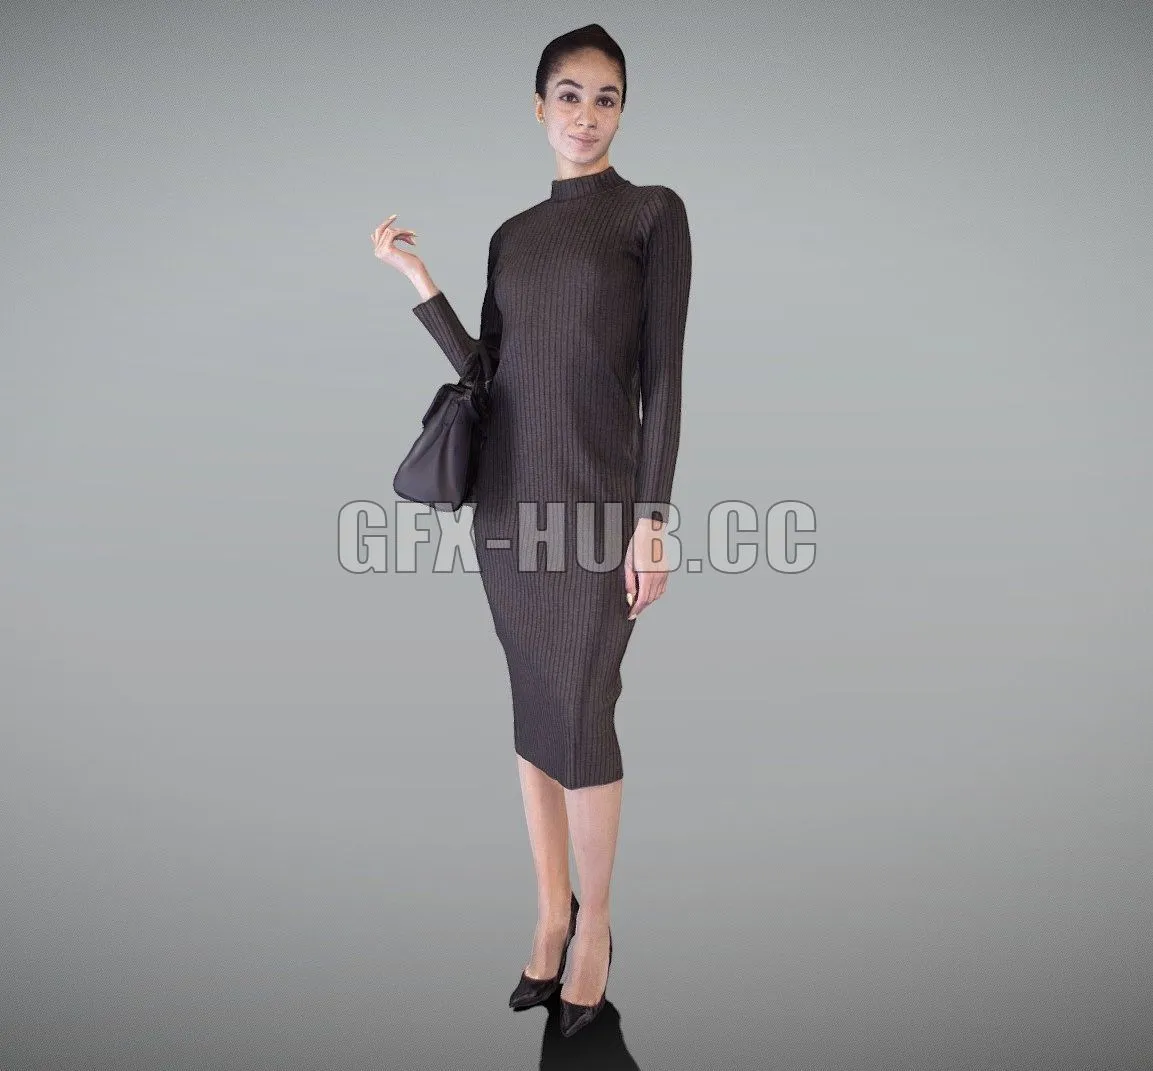 FURNITURE 3D MODELS – Elegant business woman with a bag 208